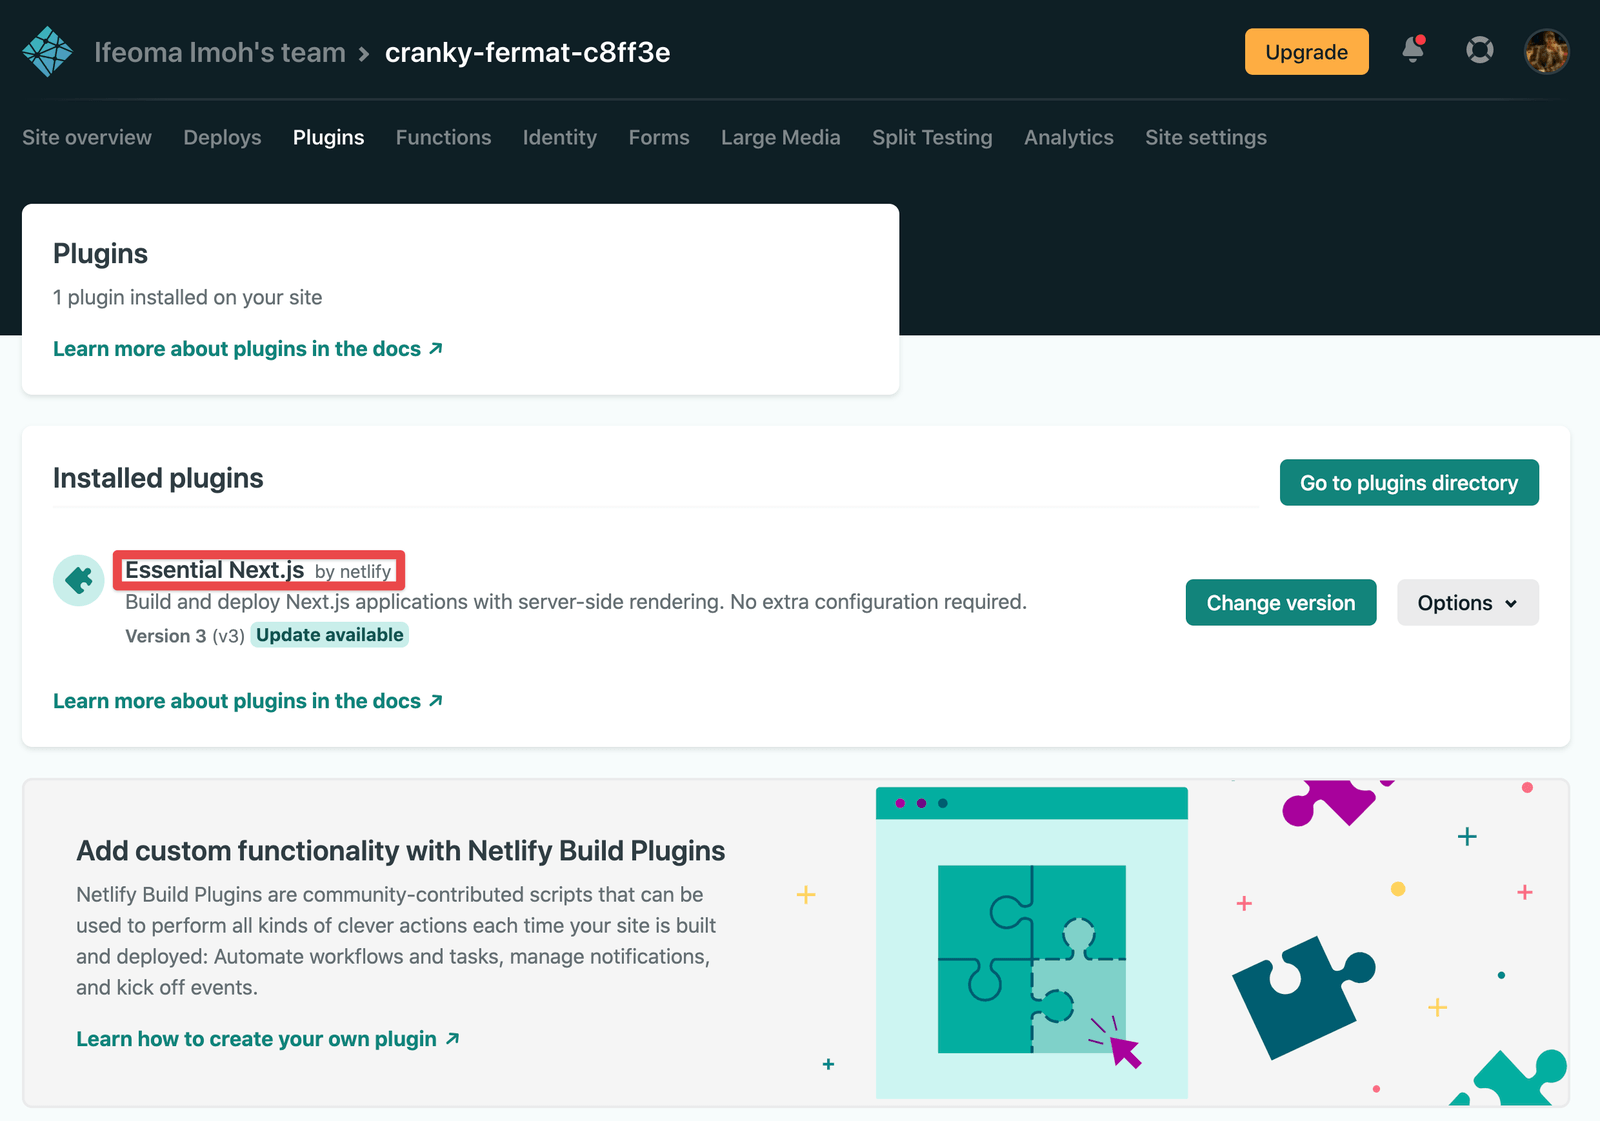 Dashboard showing Netlify’s Essential Next.js plugin